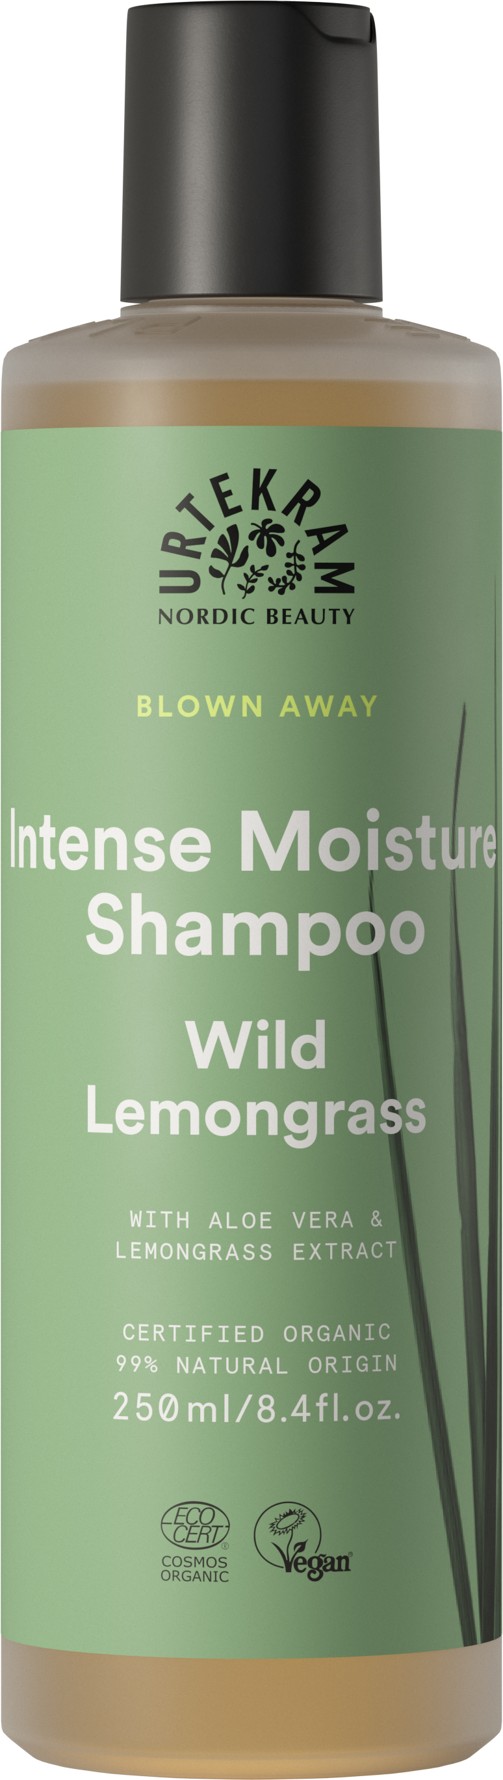 Urtekram šampon Citronová tráva, 250ml